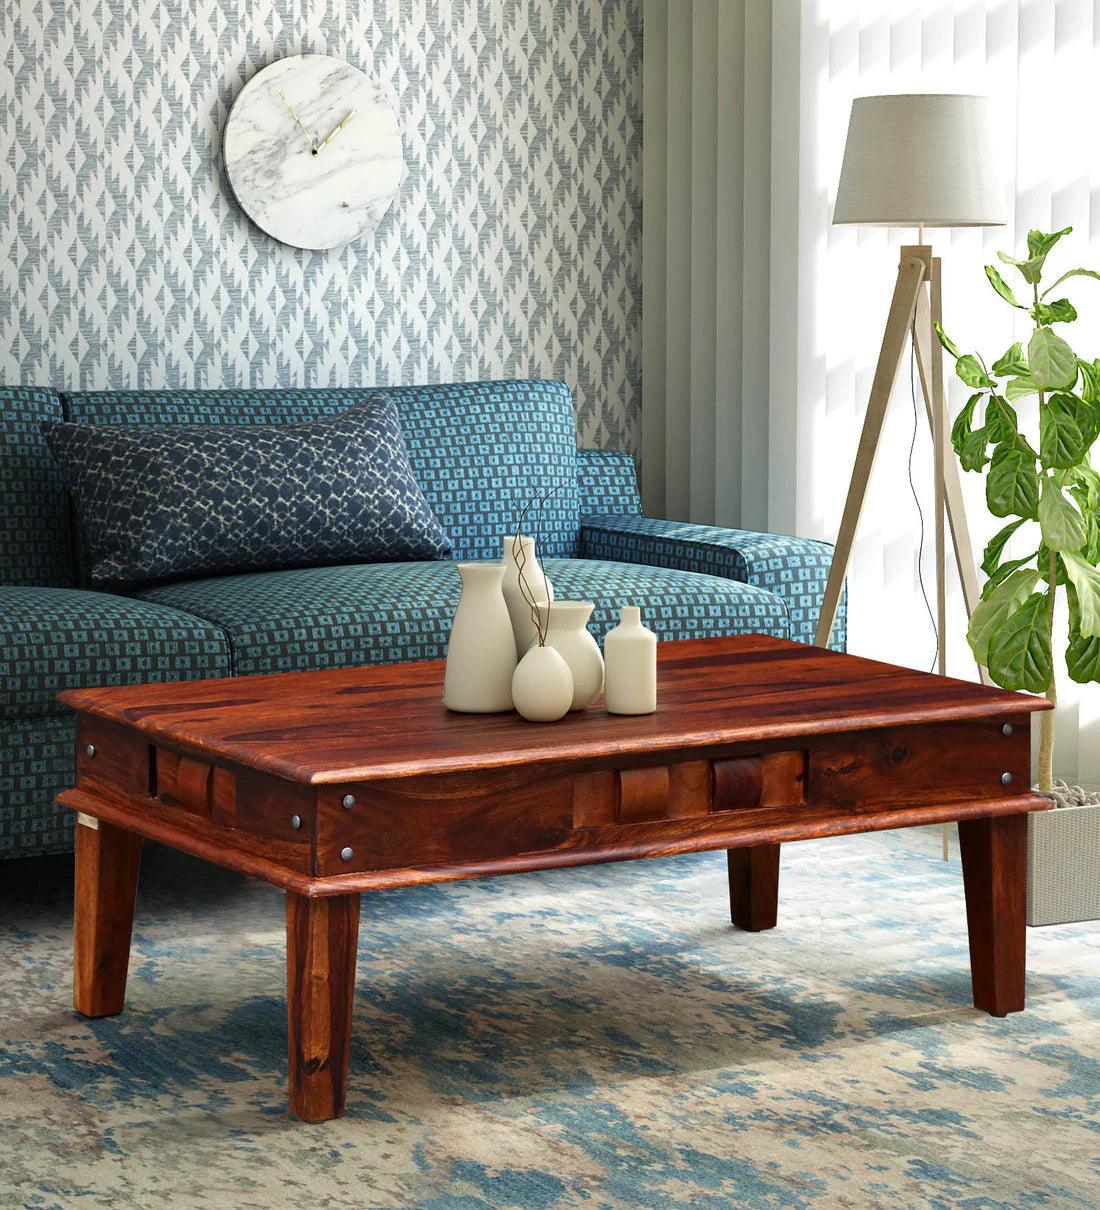 Niware Wooden Coffee Table For Living Room - Rajwada Furnish